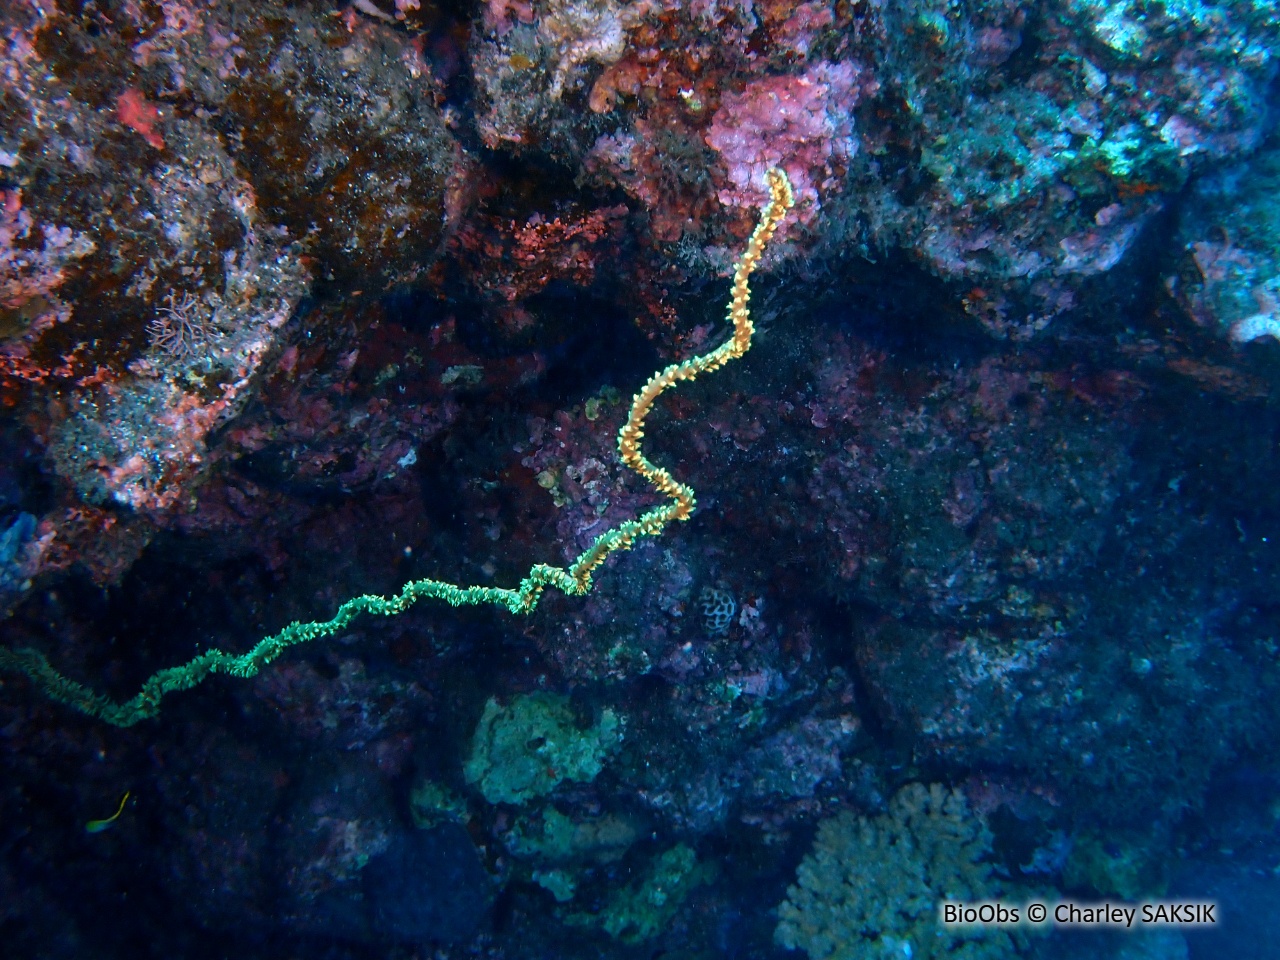 Corail fil de fer tropical - Cirrhipathes (genre) - Charley SAKSIK - BioObs